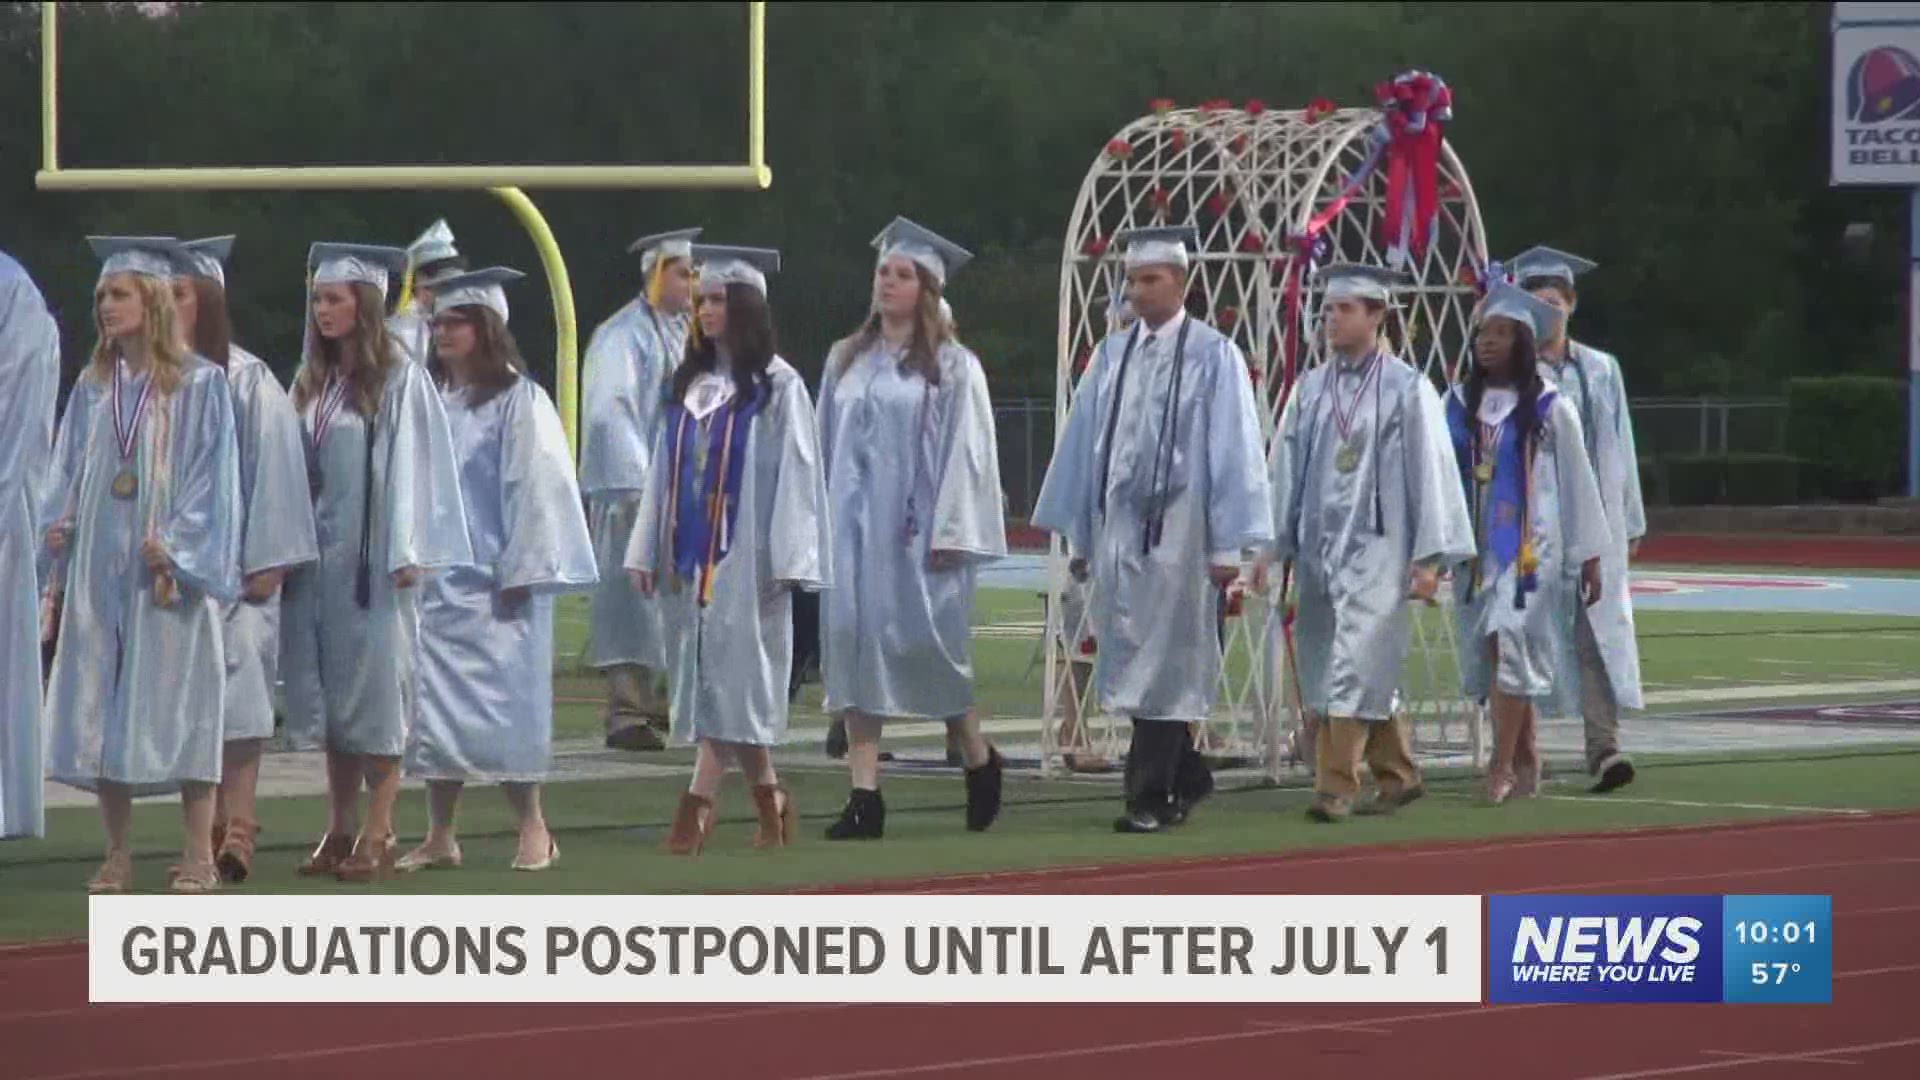 Graduations have been postponed until after July 1.